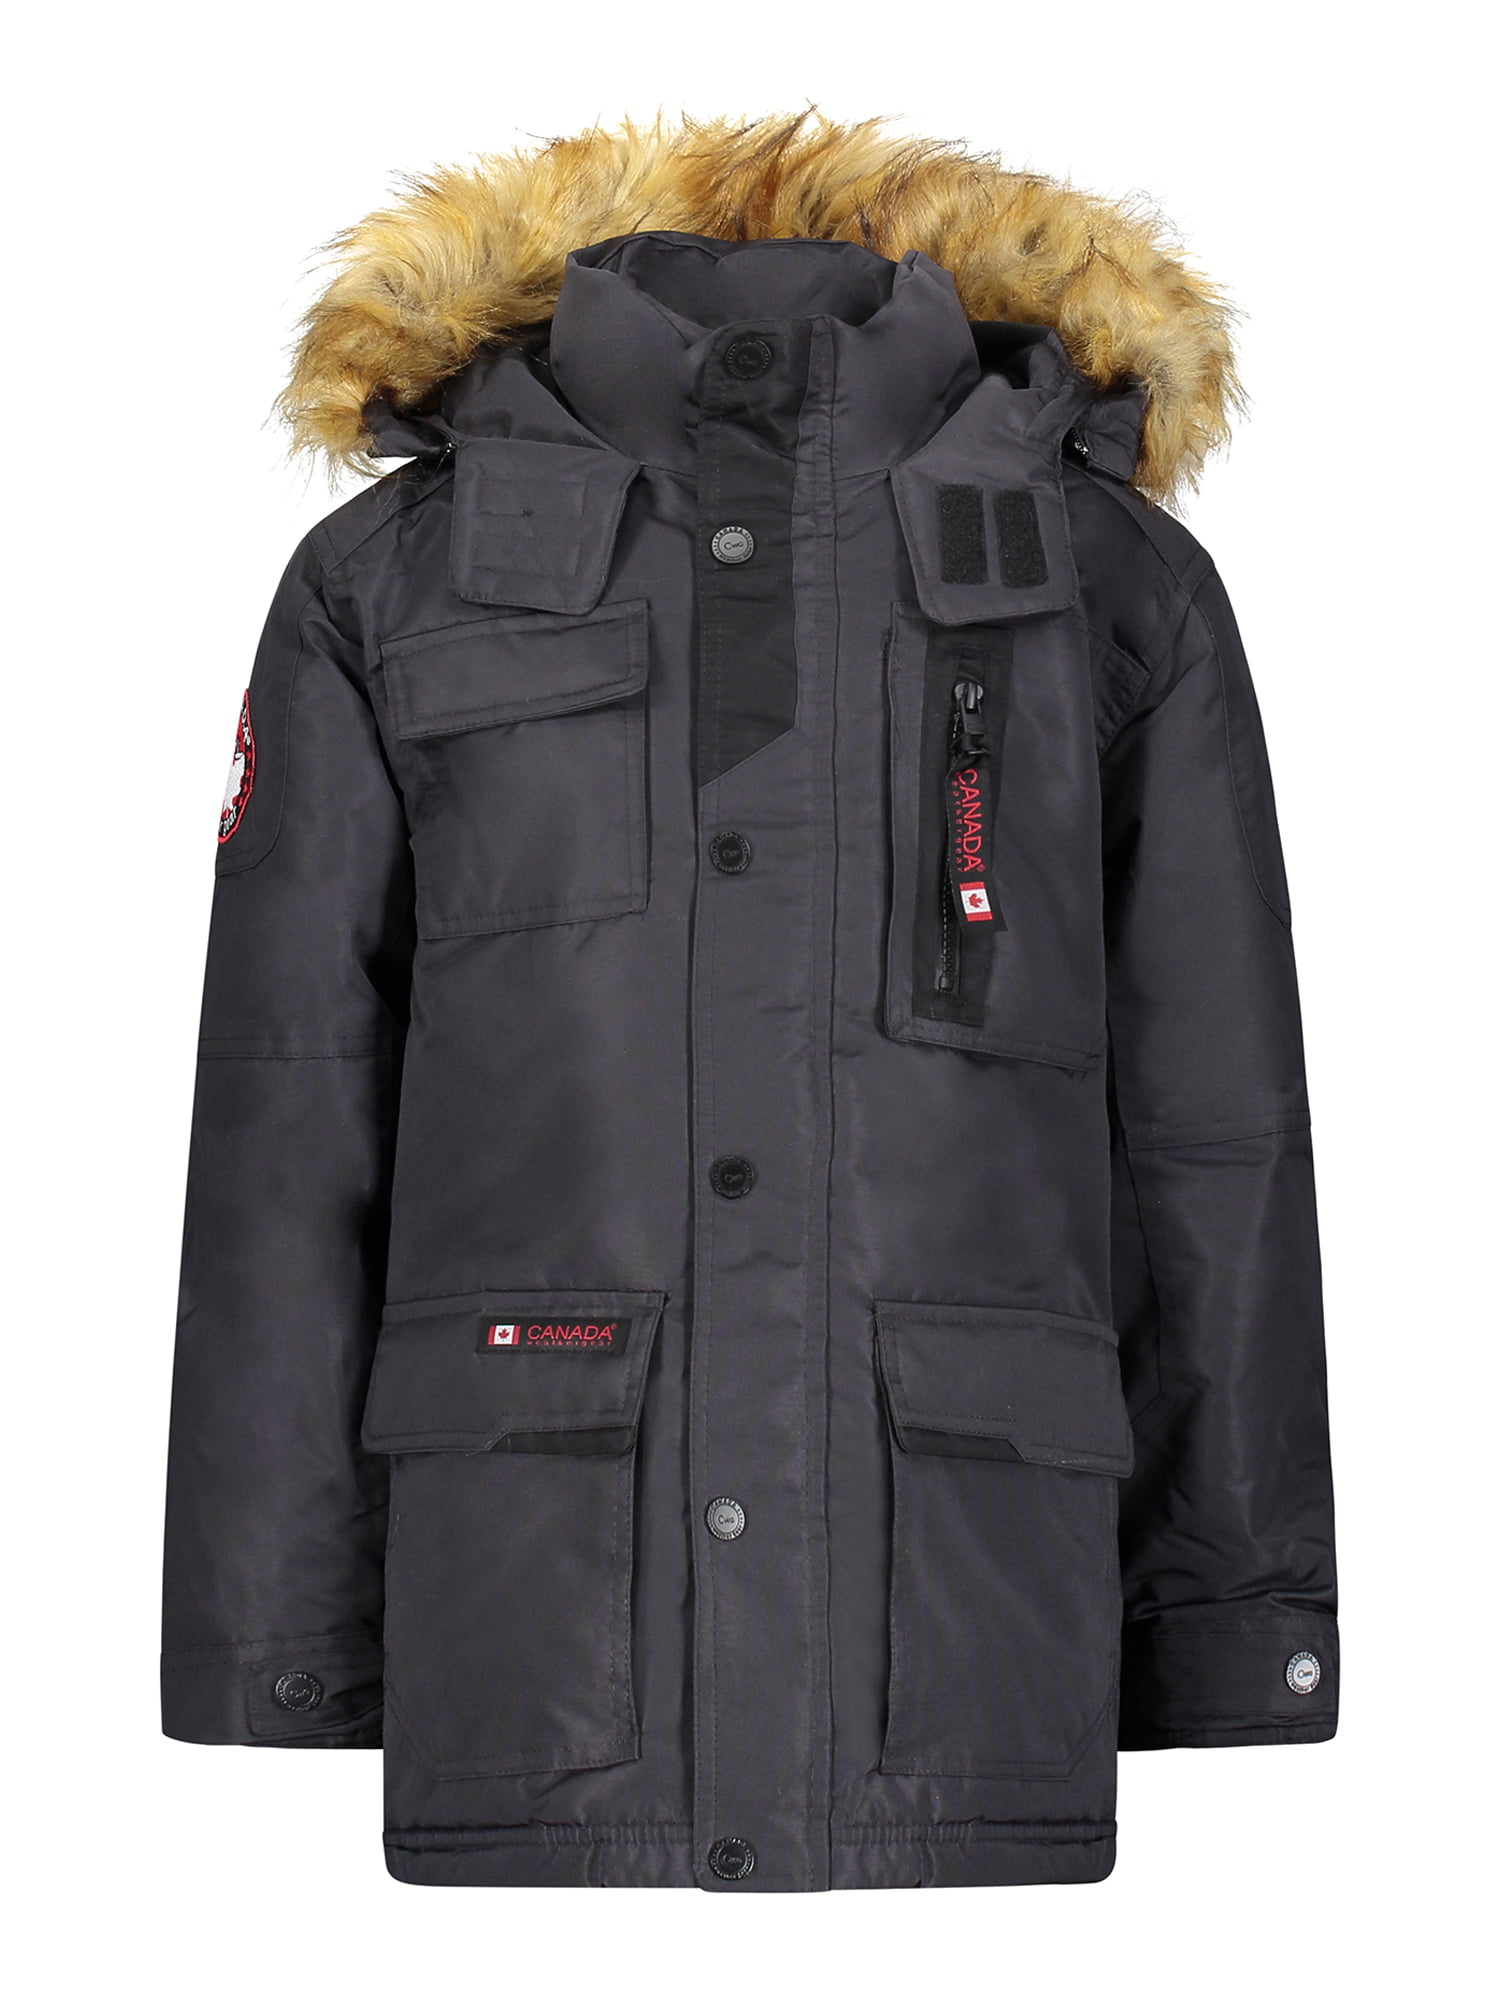 Canada Weather Gear Boys Parka with Fur Trim Hood, Sizes 8-20 - Walmart.com